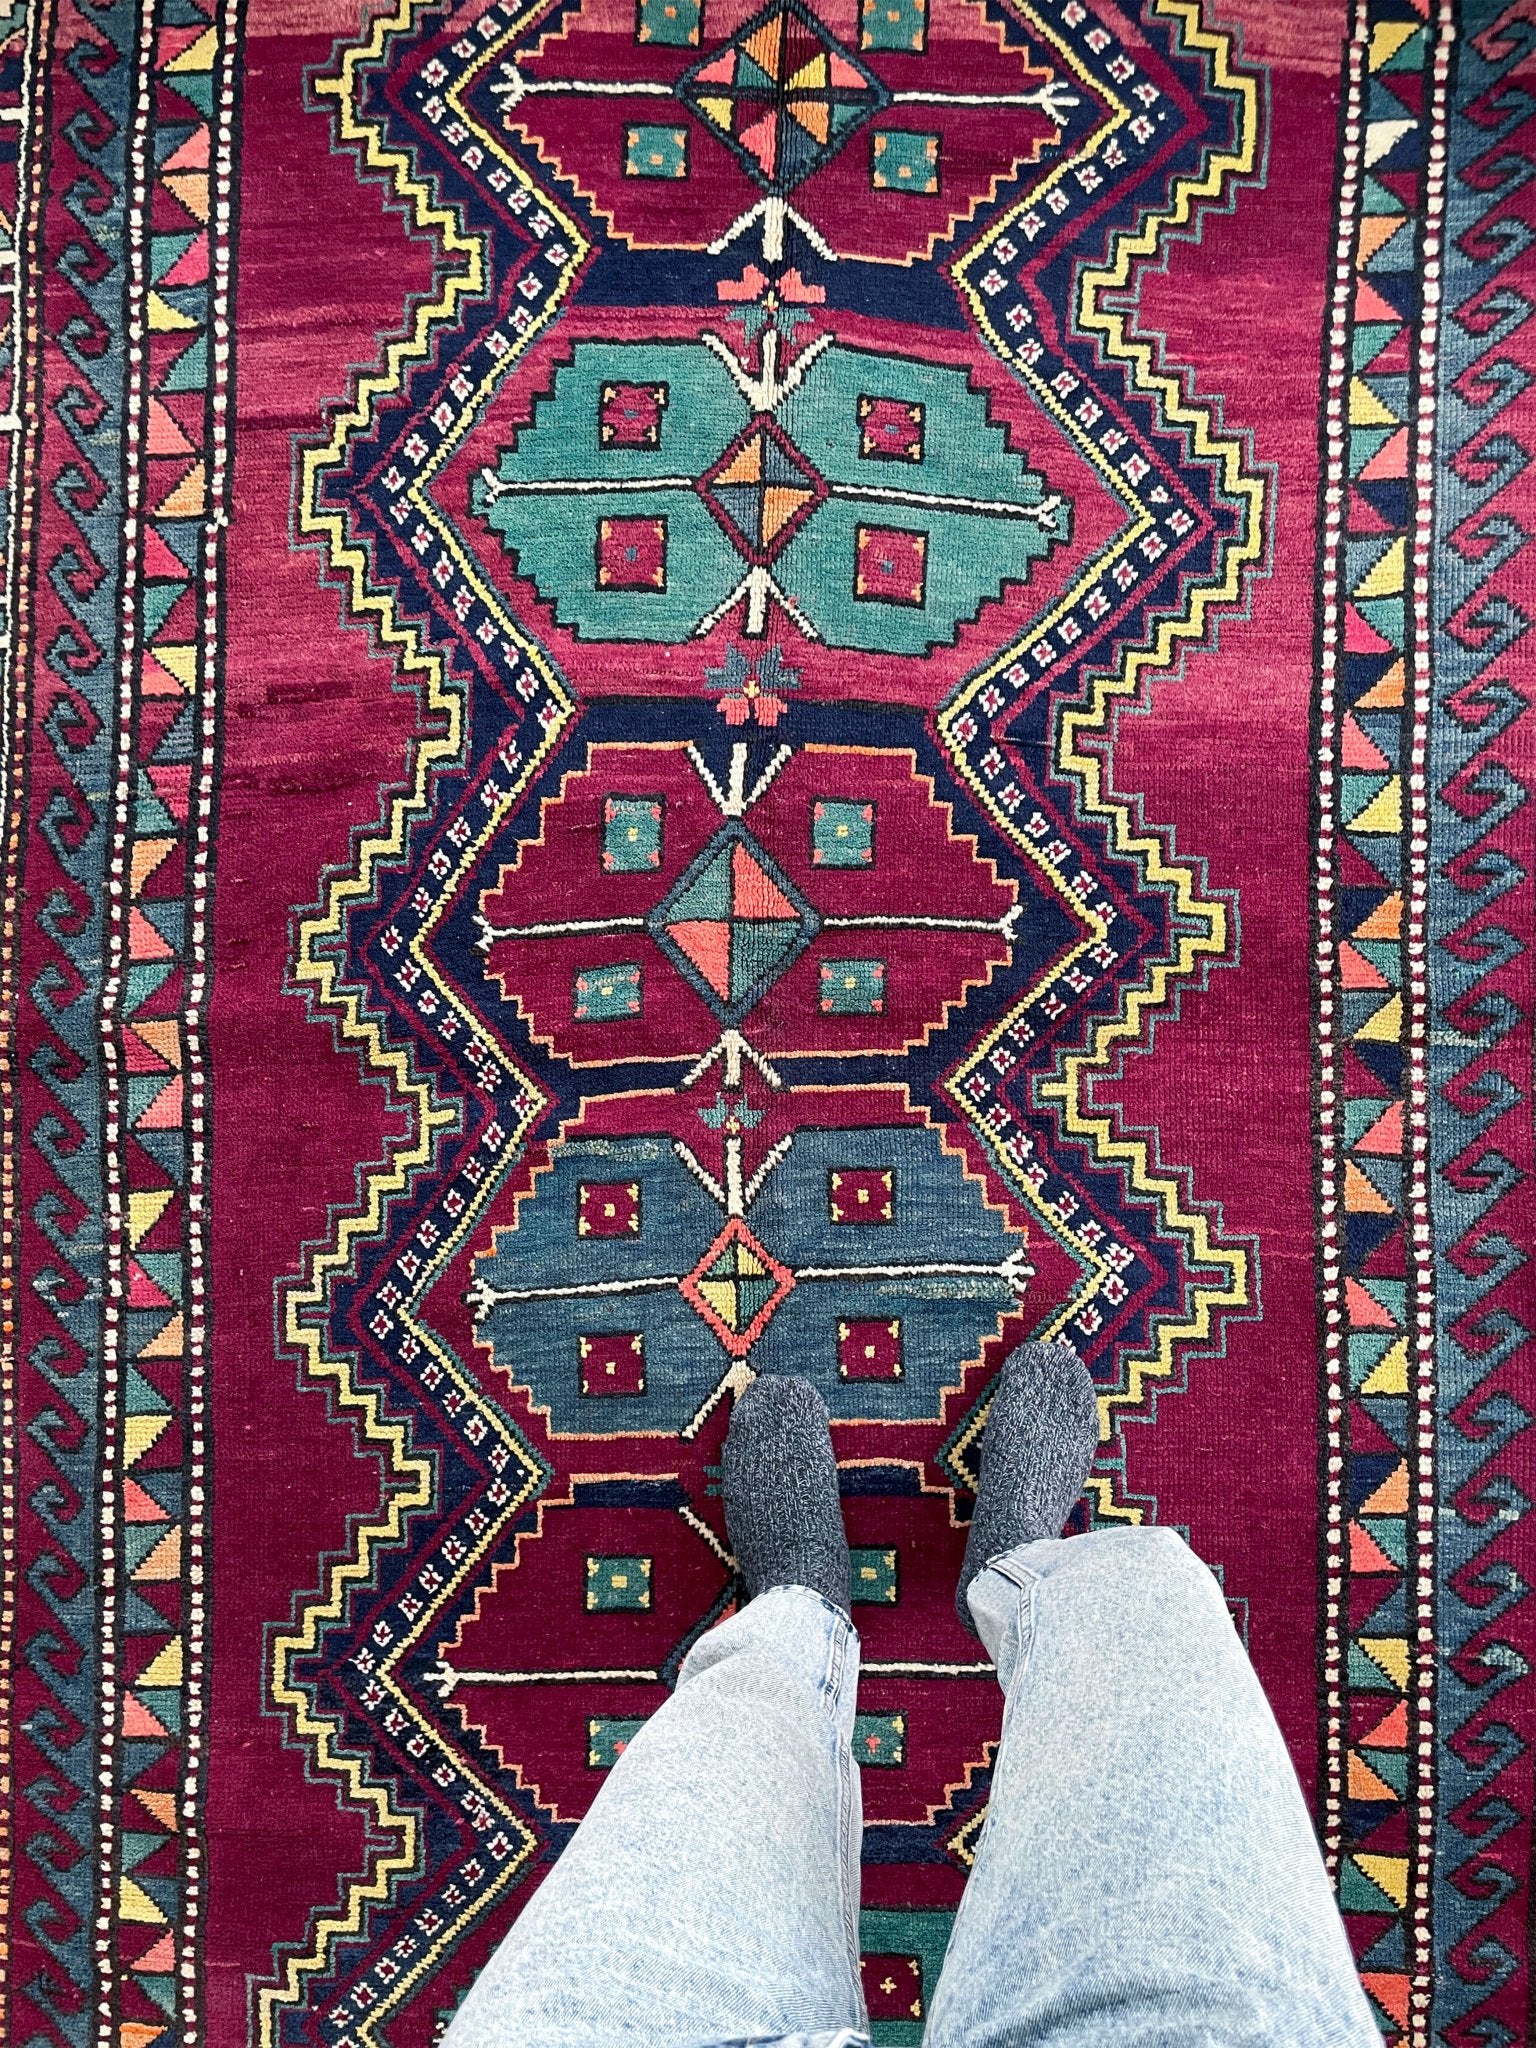 Kazak Caucasian Tribal Vintage Rug Shop San Francisco Bay Area. Buy handmade wool rug online free shipping USA and Canada.